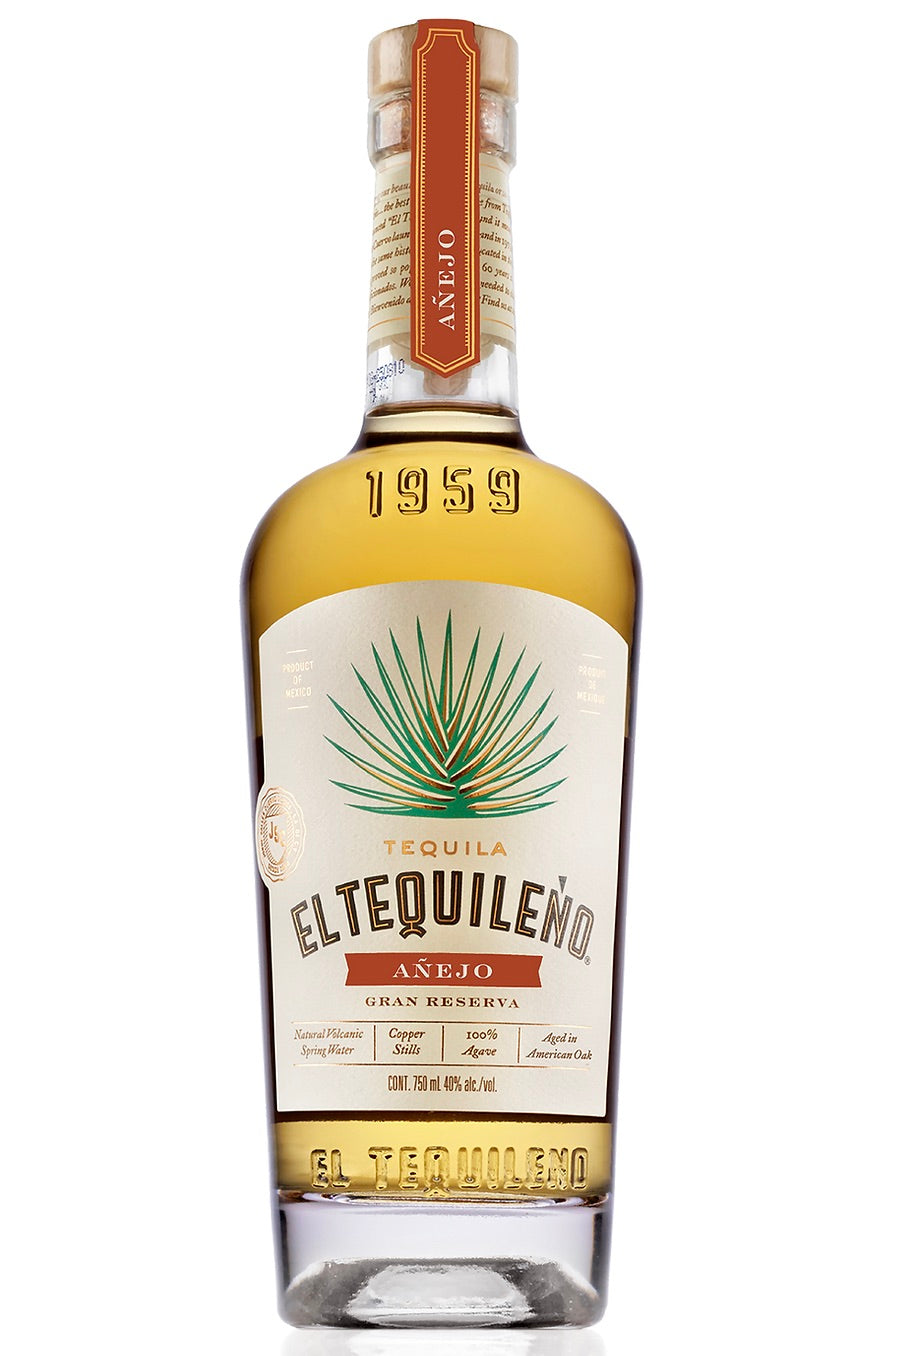 El Tequileno Anejo Gran Reserva Tequila